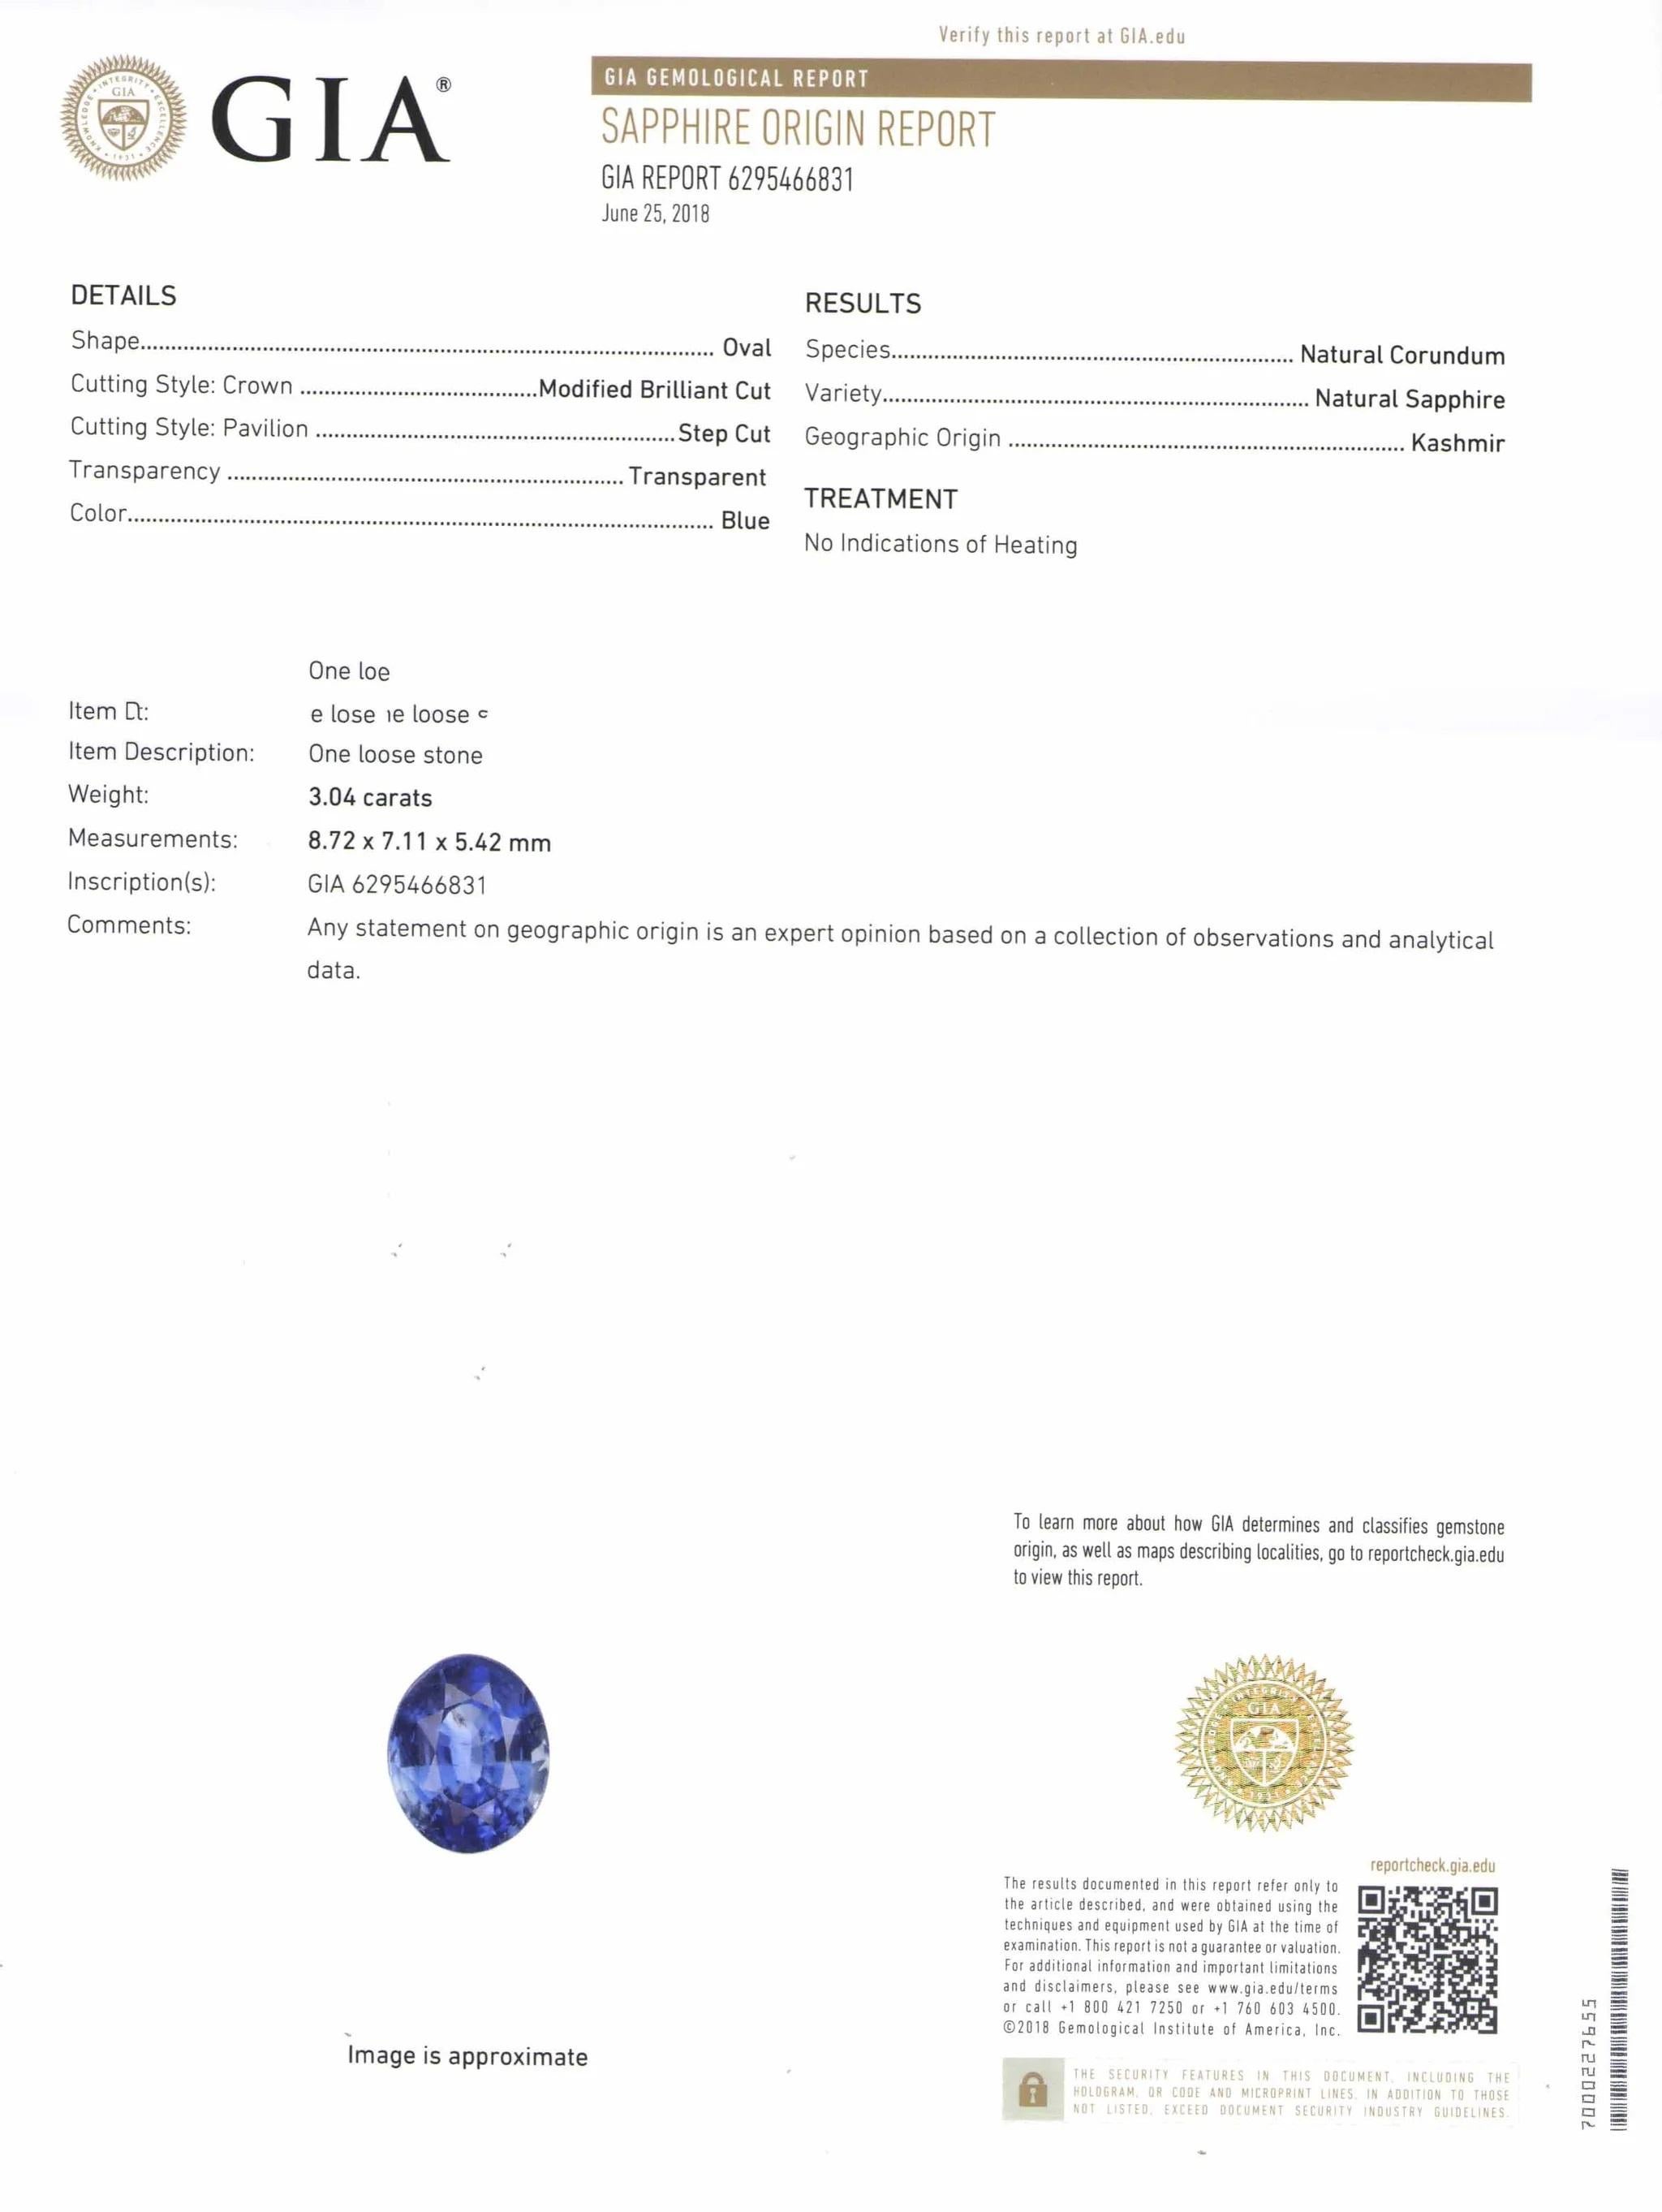 Modern GIA Certified 3 Carat No Heat Royal Blue Kashmir Cushion Sapphire Ring For Sale